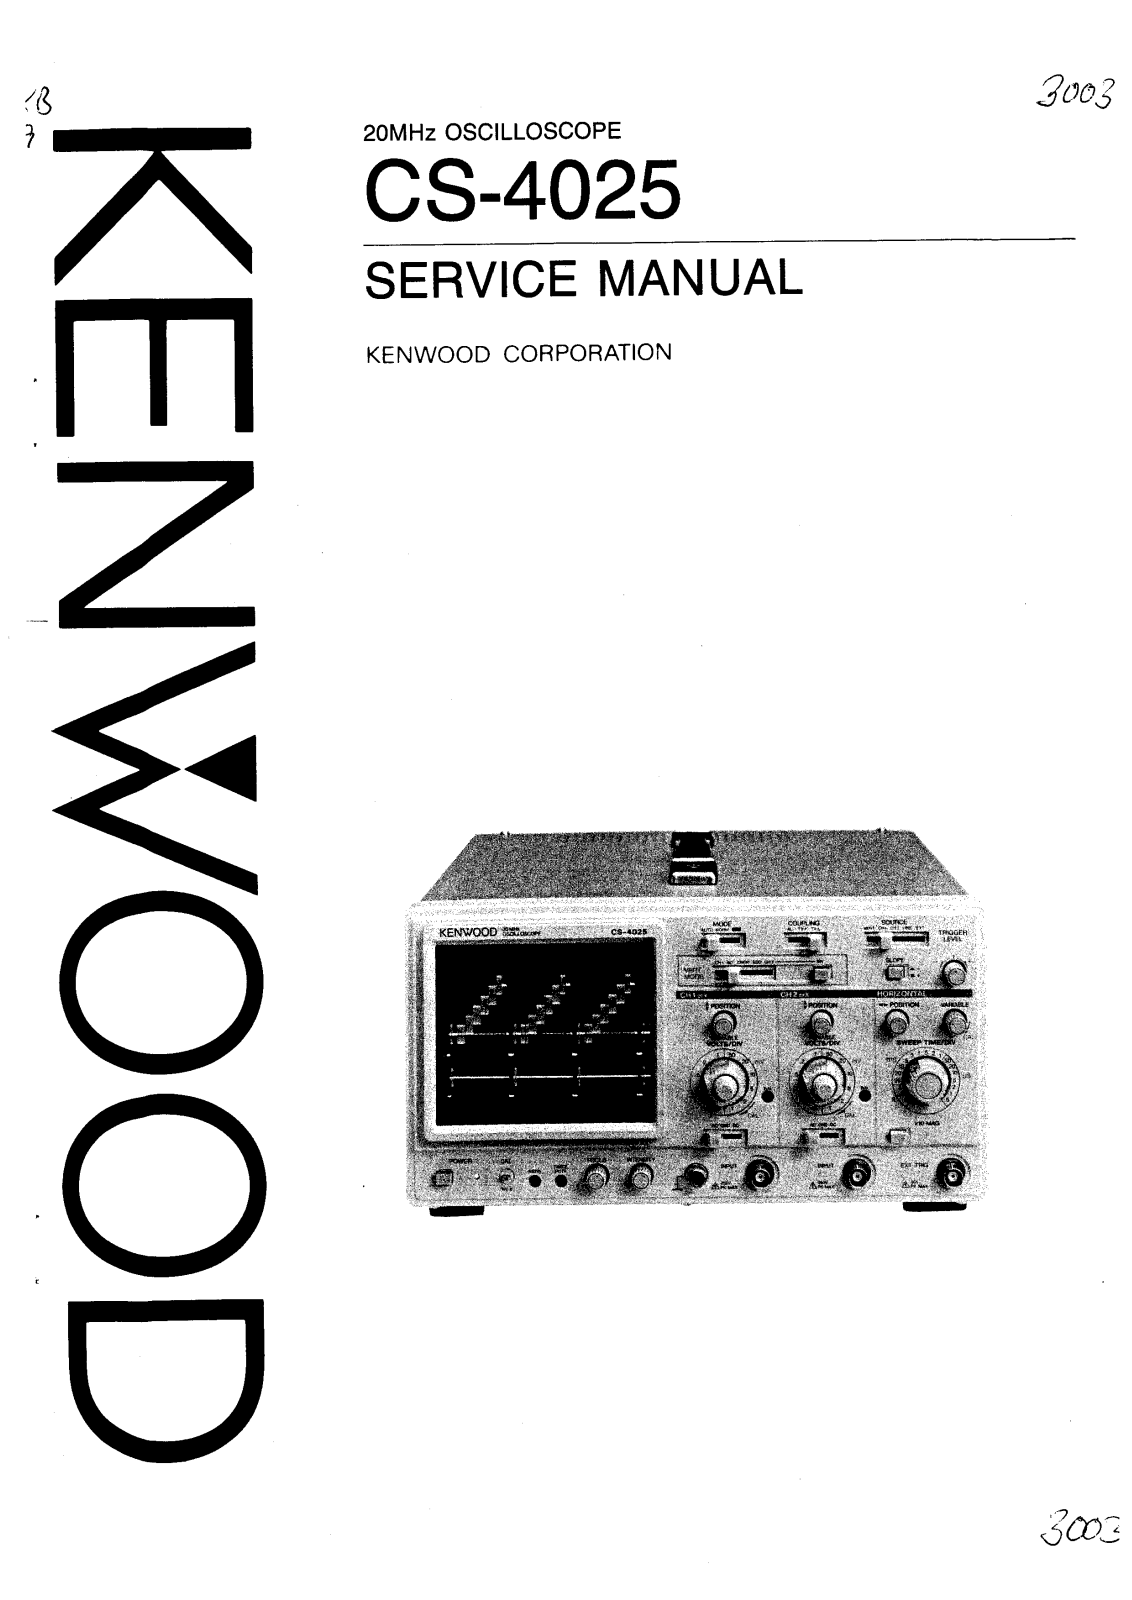 Kenwood CS-4025 Service Manual